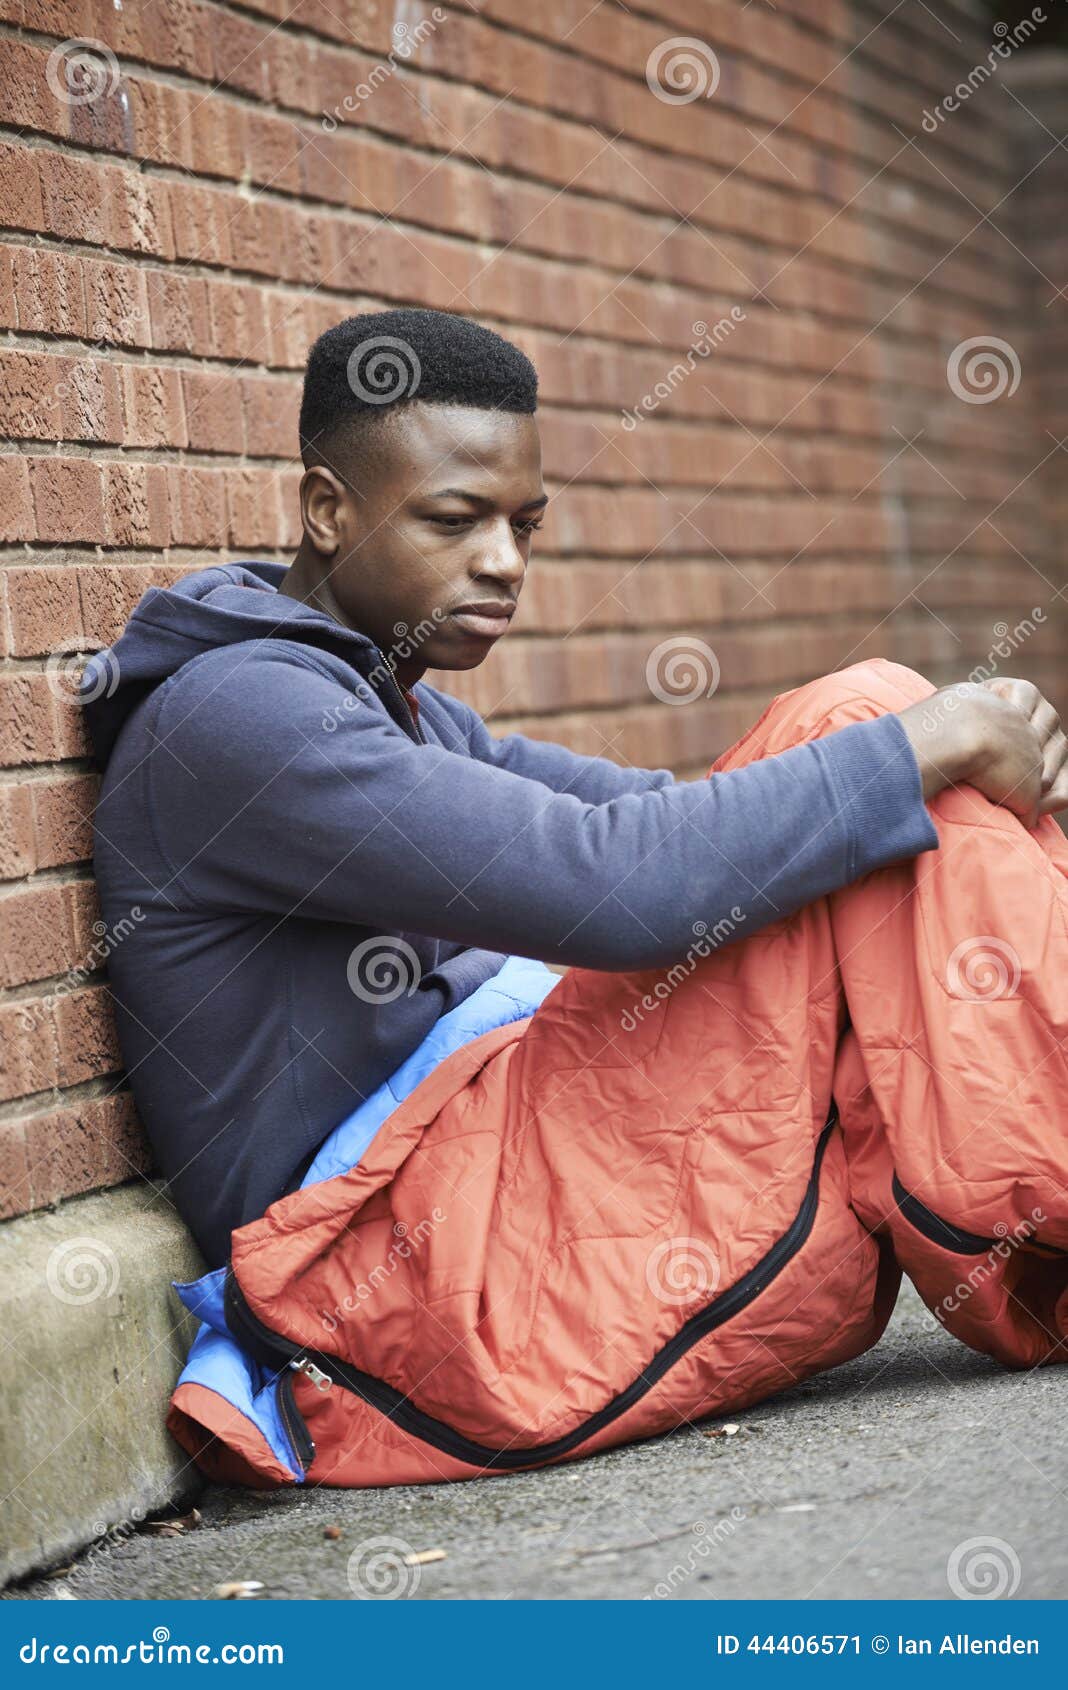 vulnerable teenage boy sleeping on the street